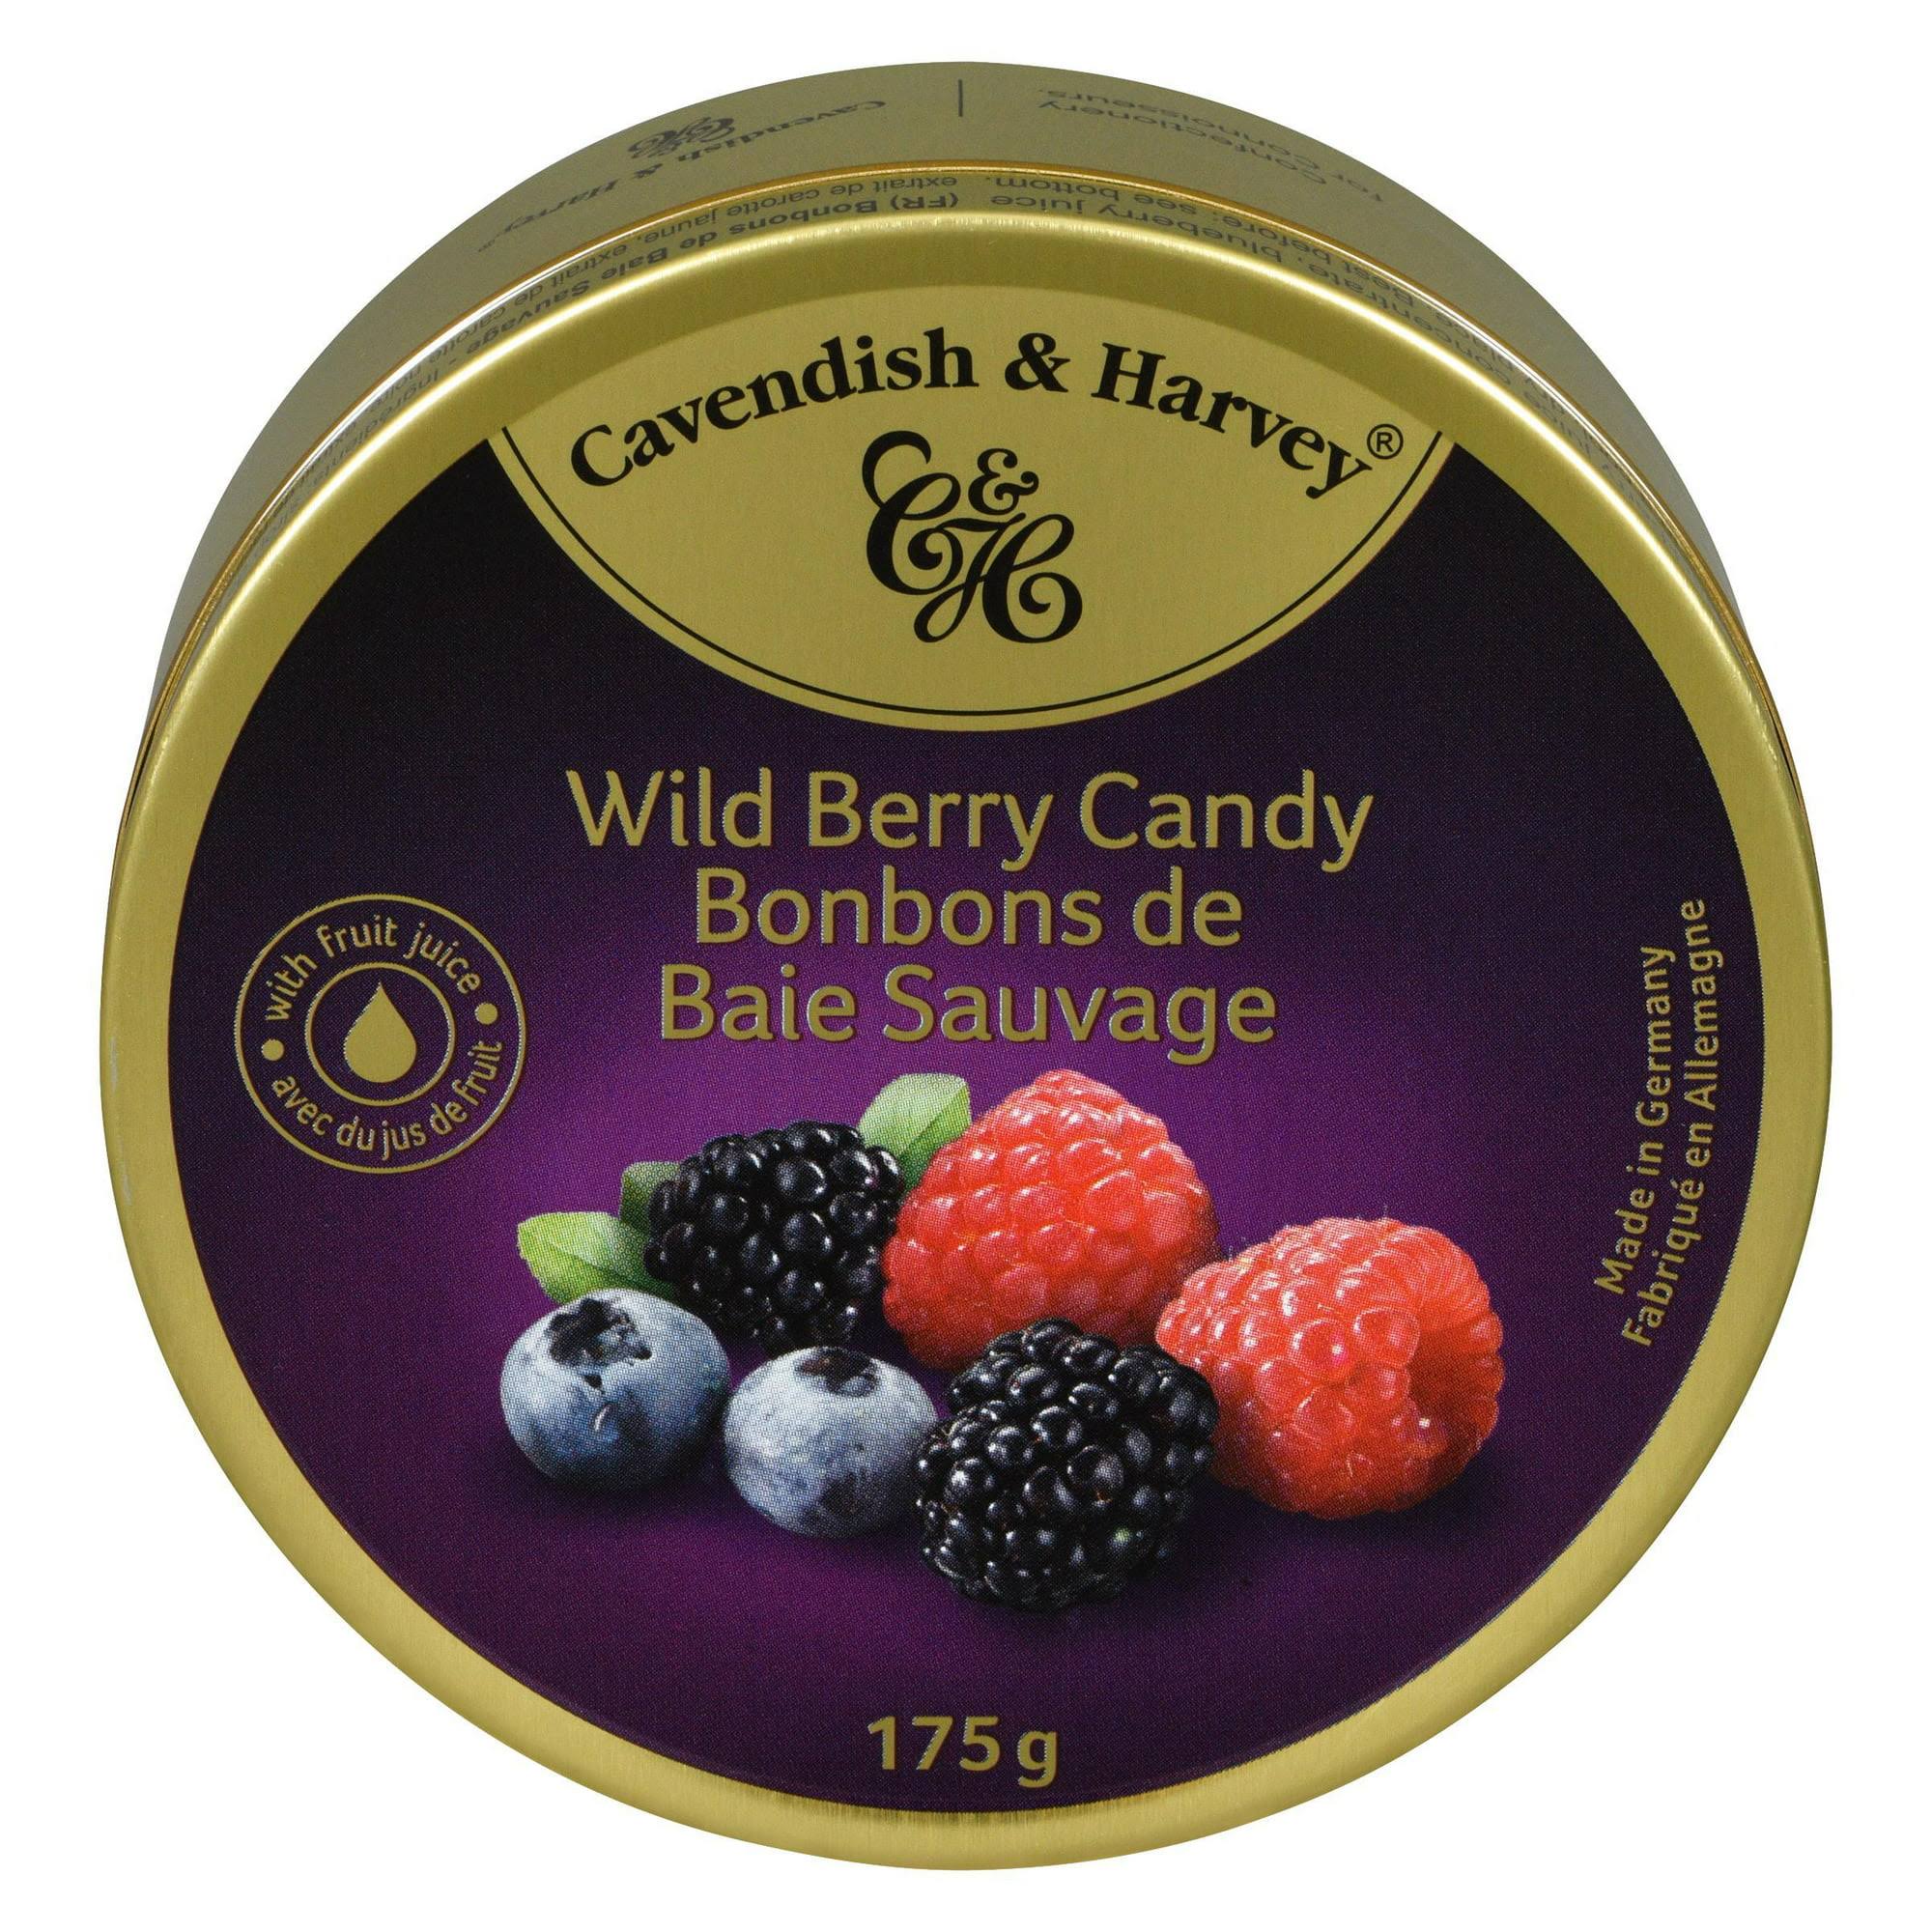 Cavendish & Harvey Drops - Wild Berry, 150g